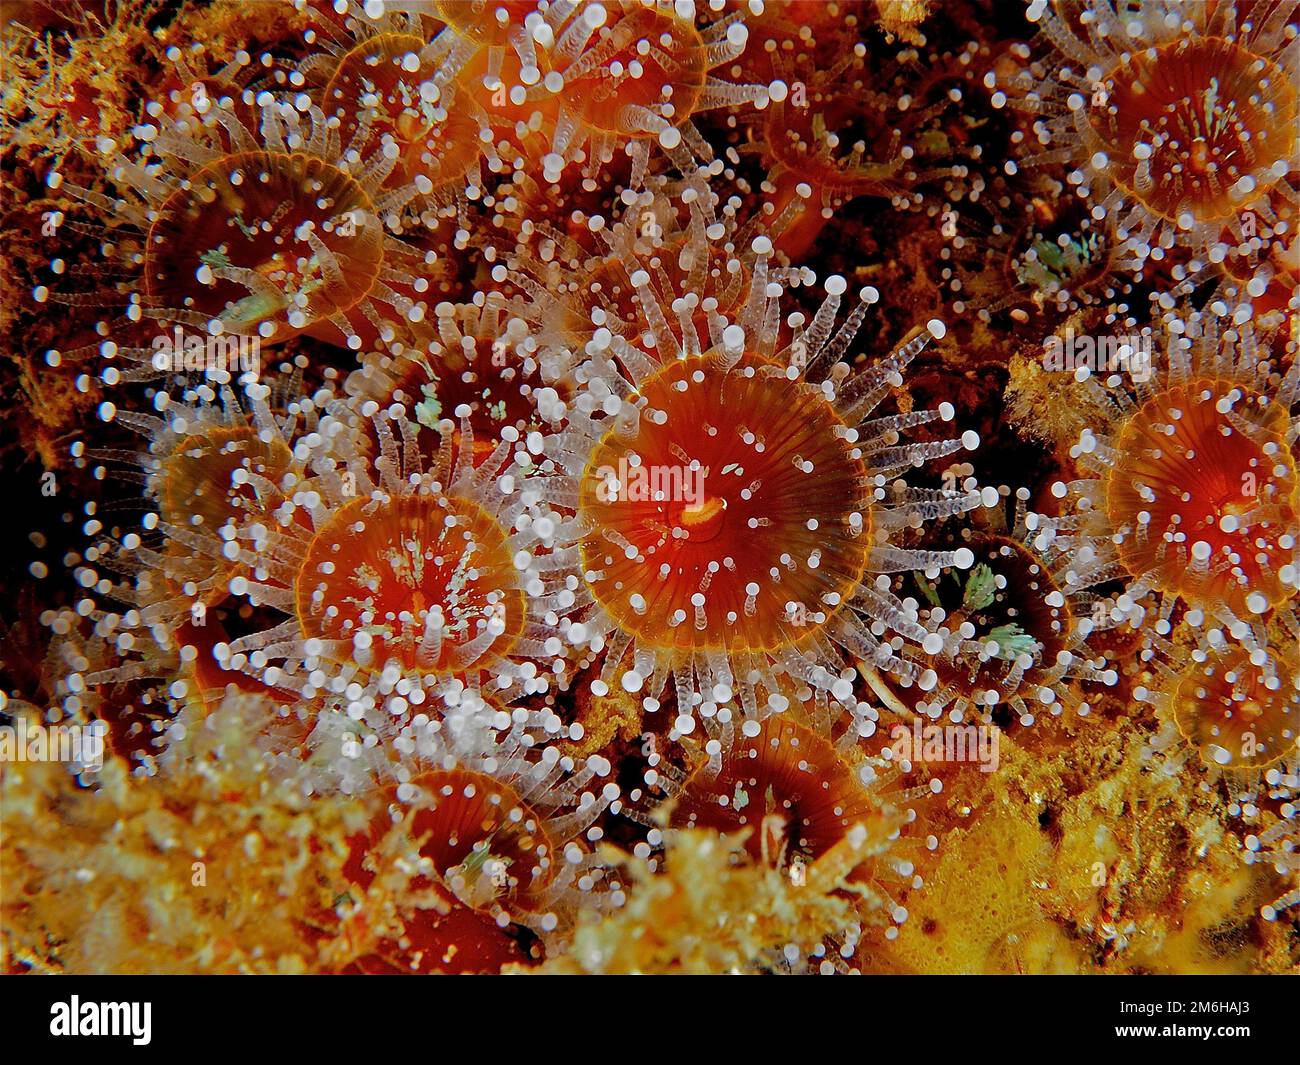 Anémona joya naranja (Corynactis viridis) Anémona marina. Sitio de buceo Maharees Islands, Castlegregory, Co. Kerry, Mar de Irlanda, Atlántico Norte, Irlanda Foto de stock